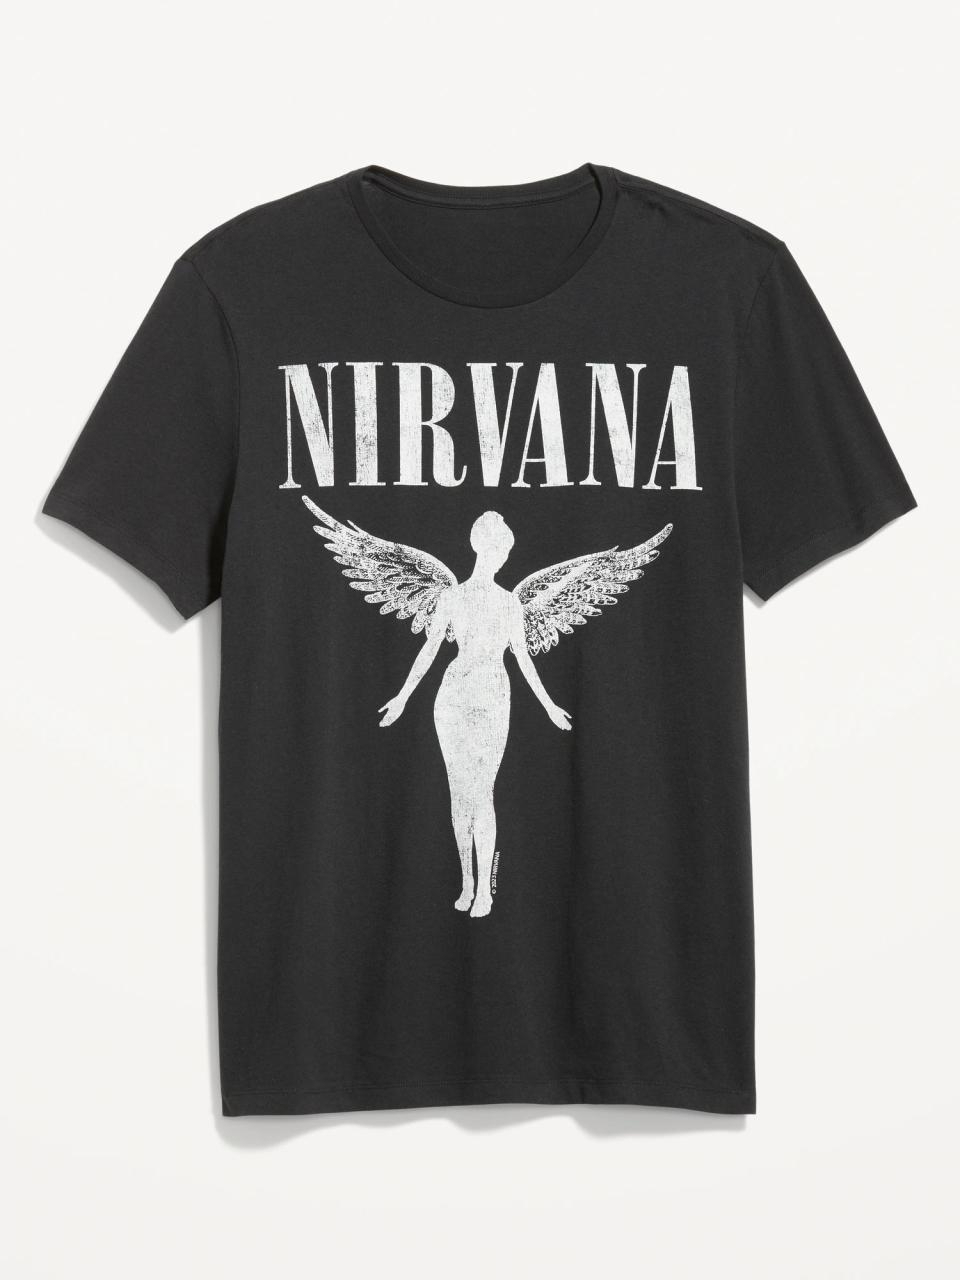 black shirt that reads "Nirvana" in white